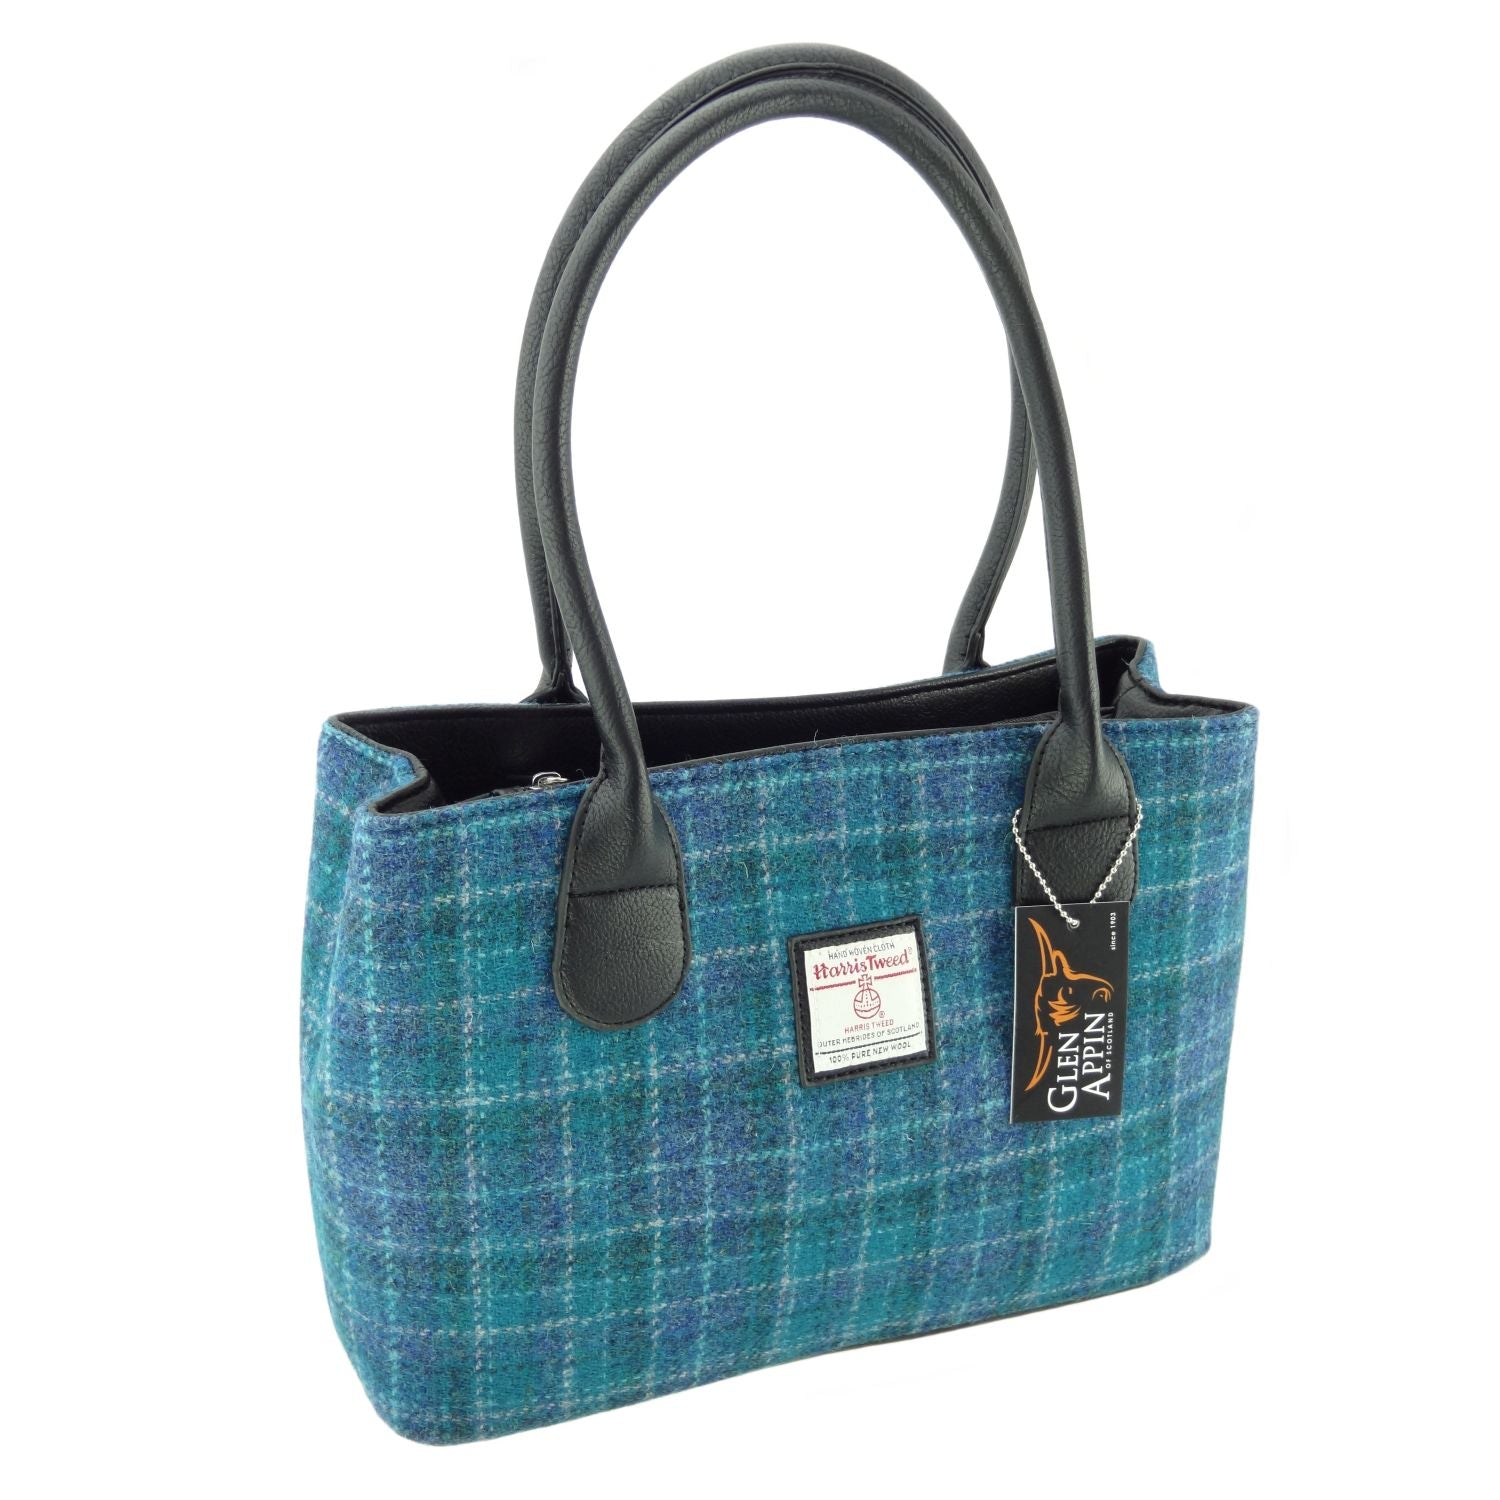 Classic Harris Tweed Handbag By Glen Appin - Cassley LB1003